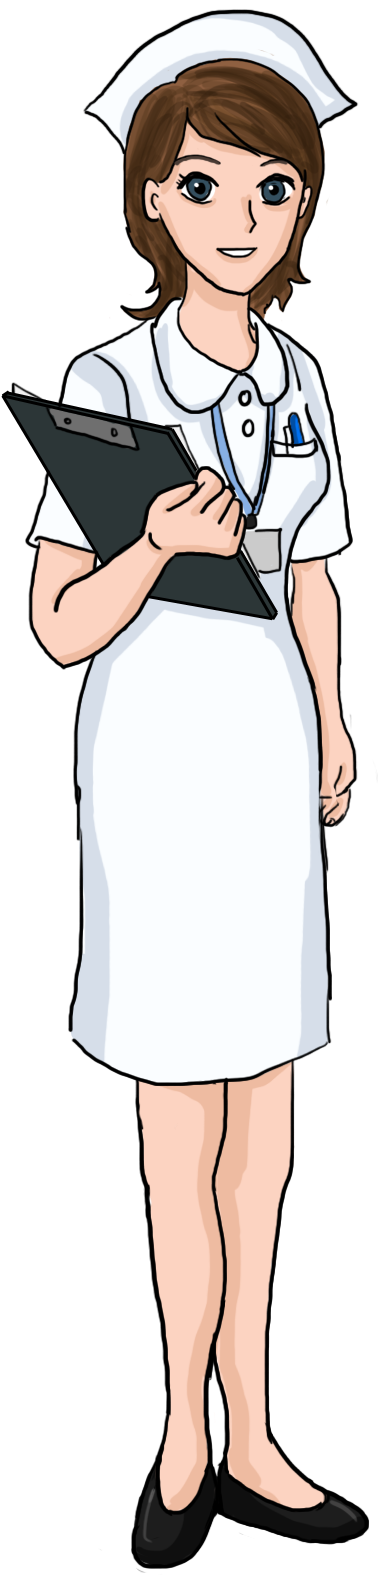 Professional Nurse Cartoon Character PNG image